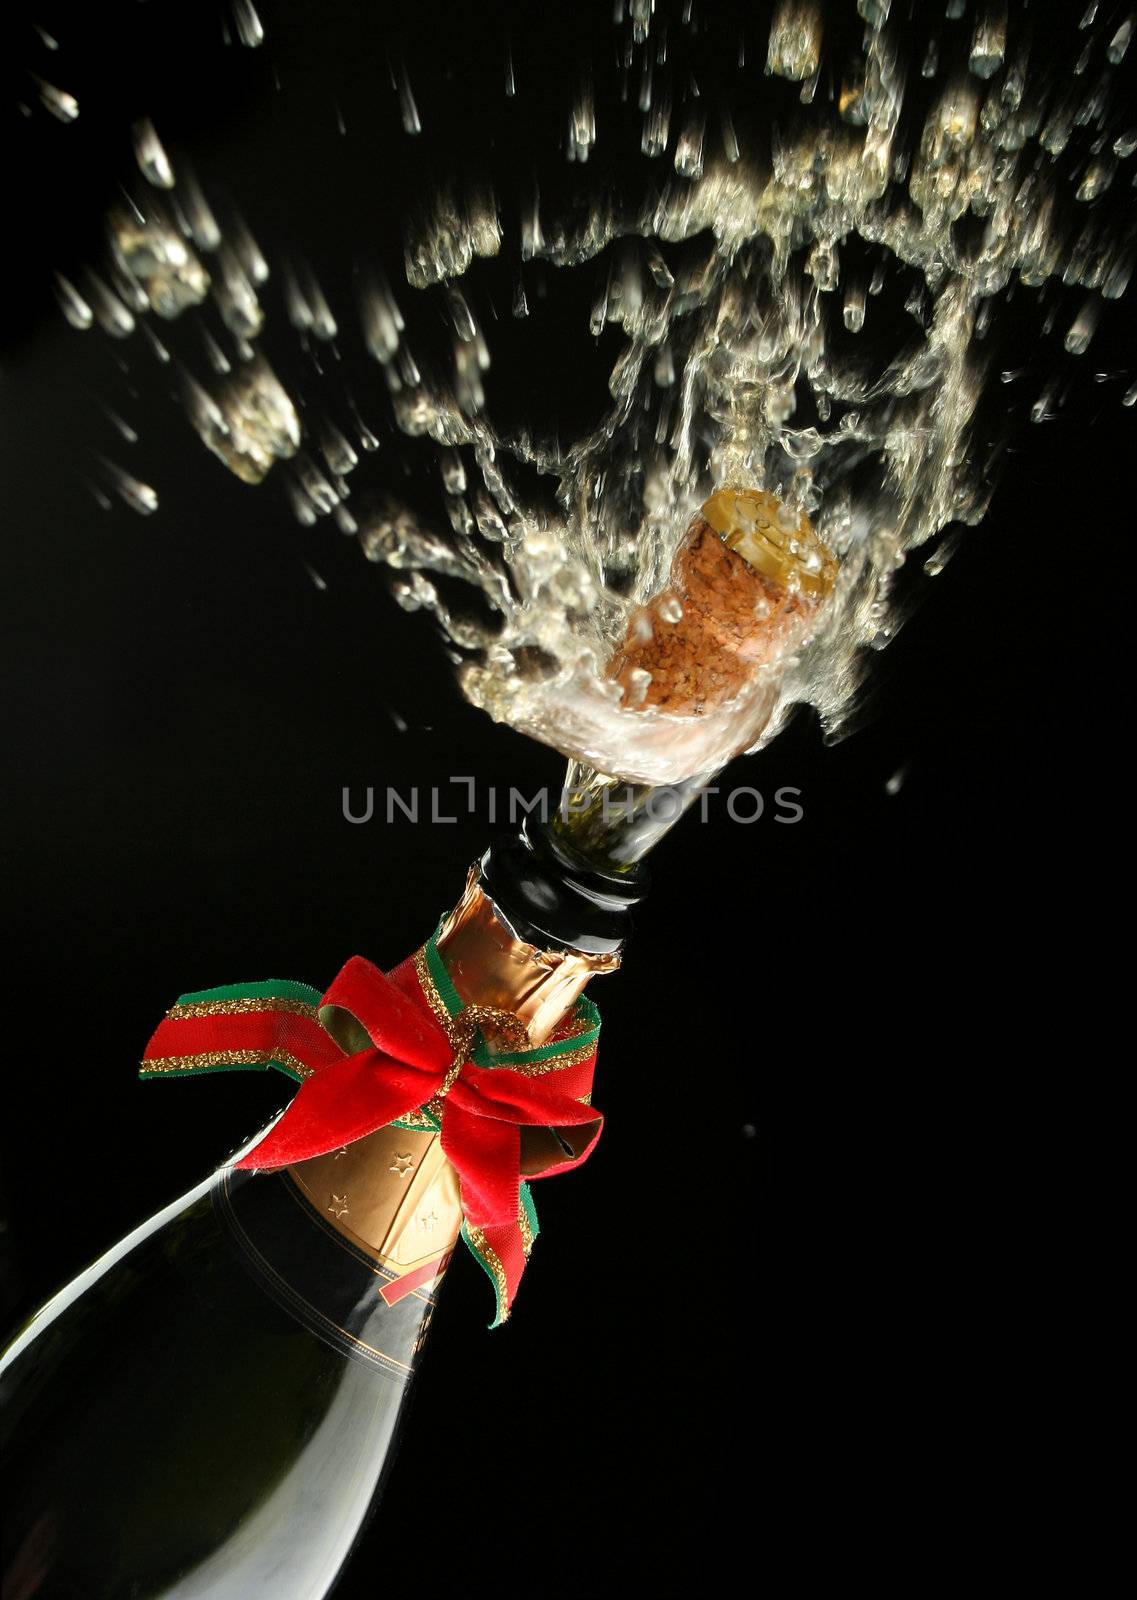 Champagne bottle ready for celebration by Erdosain